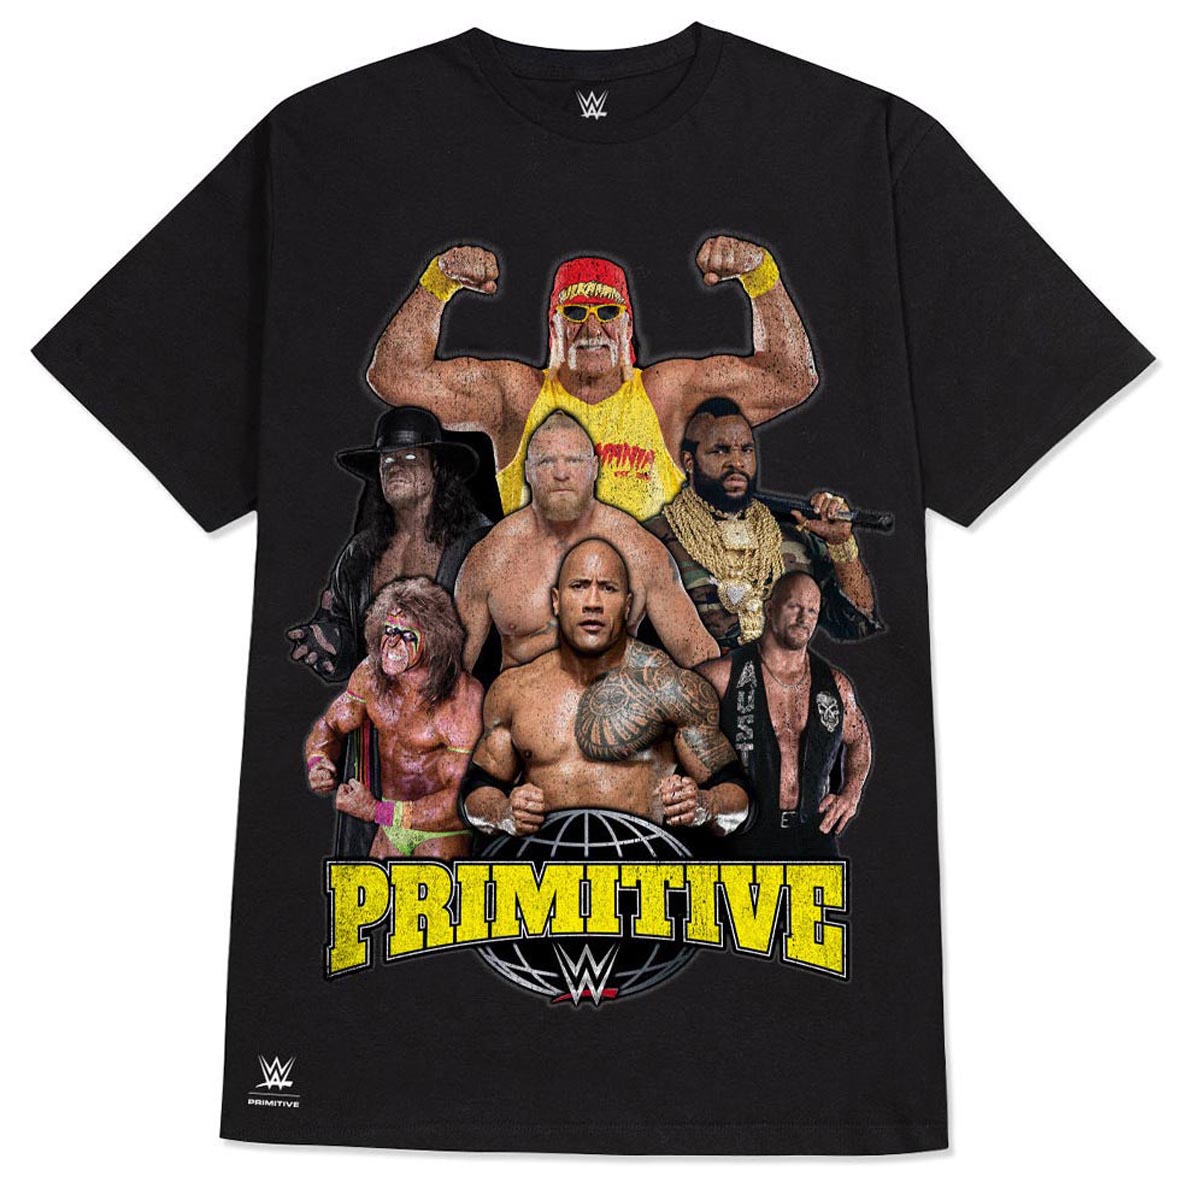 Primitive x WWE Mania T-Shirt - Black image 1